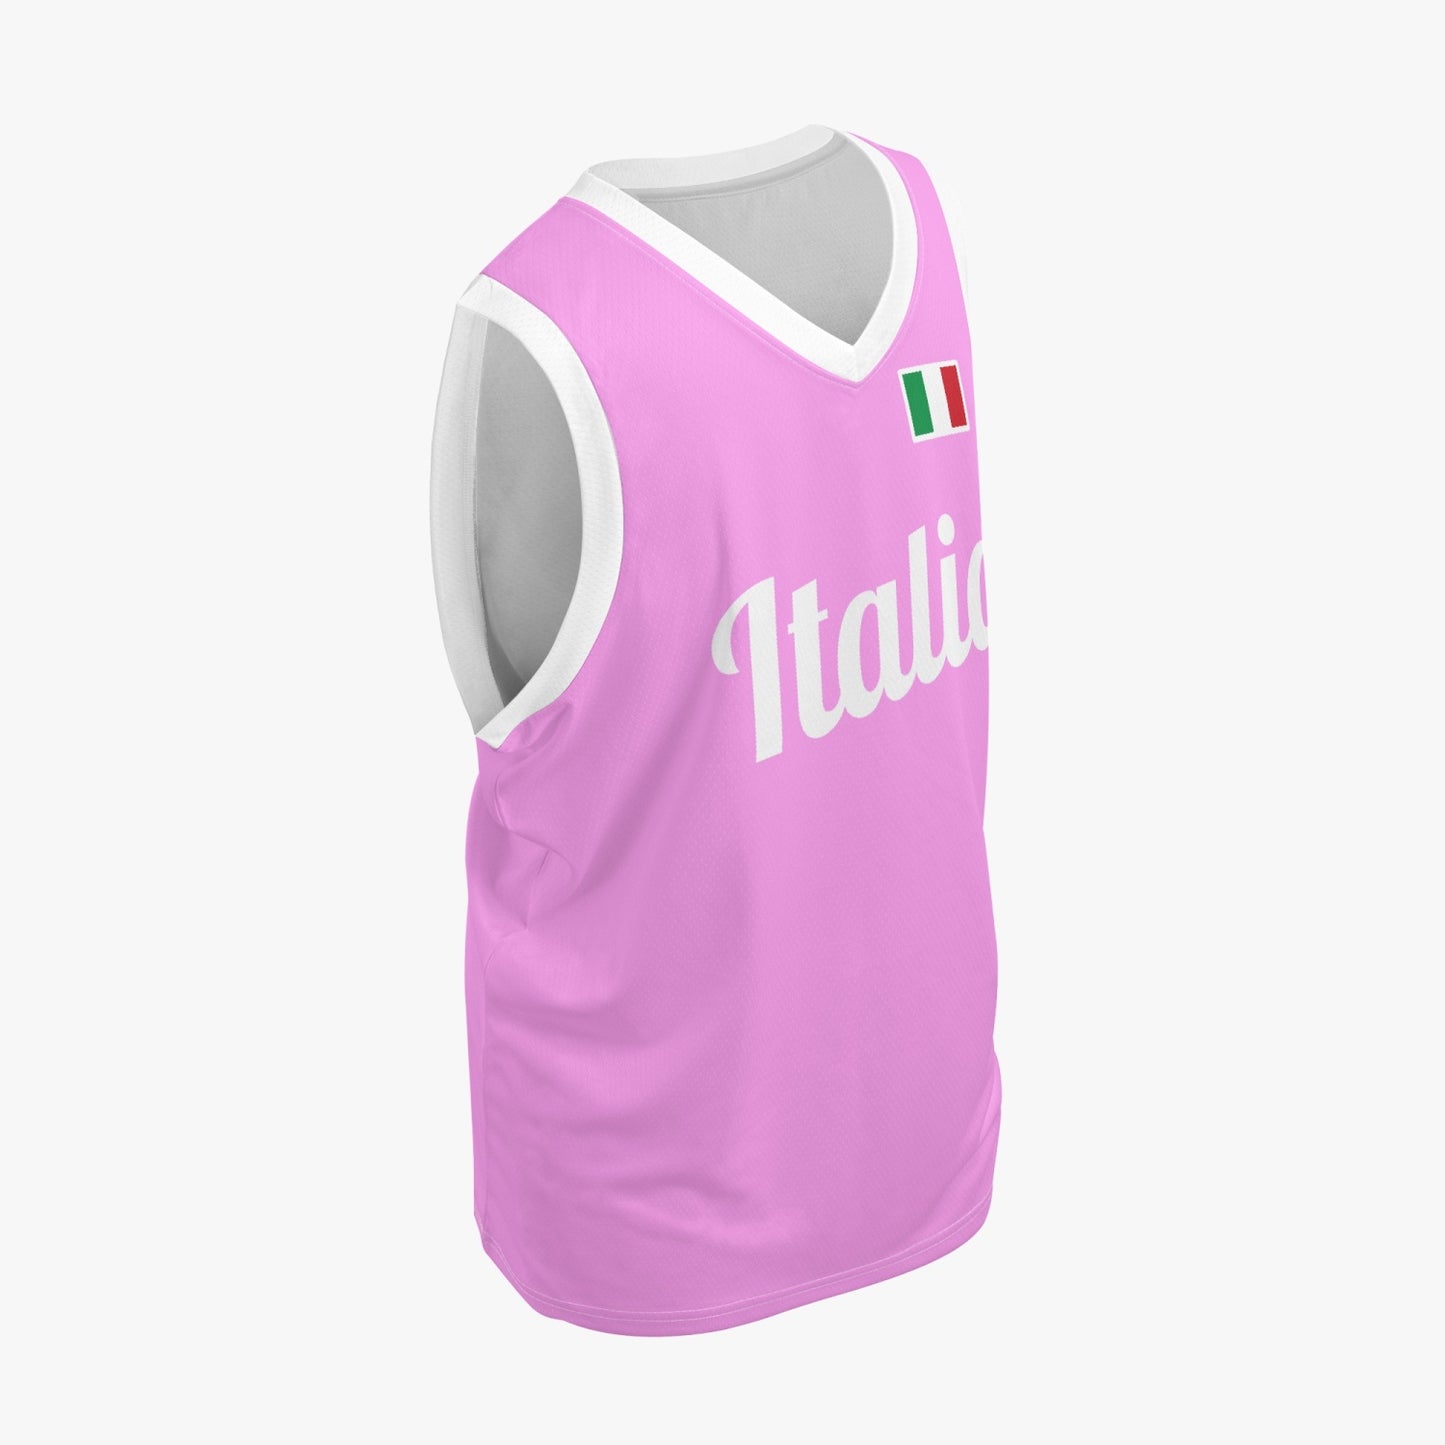 Italy Basketball Jersey Set - Pink